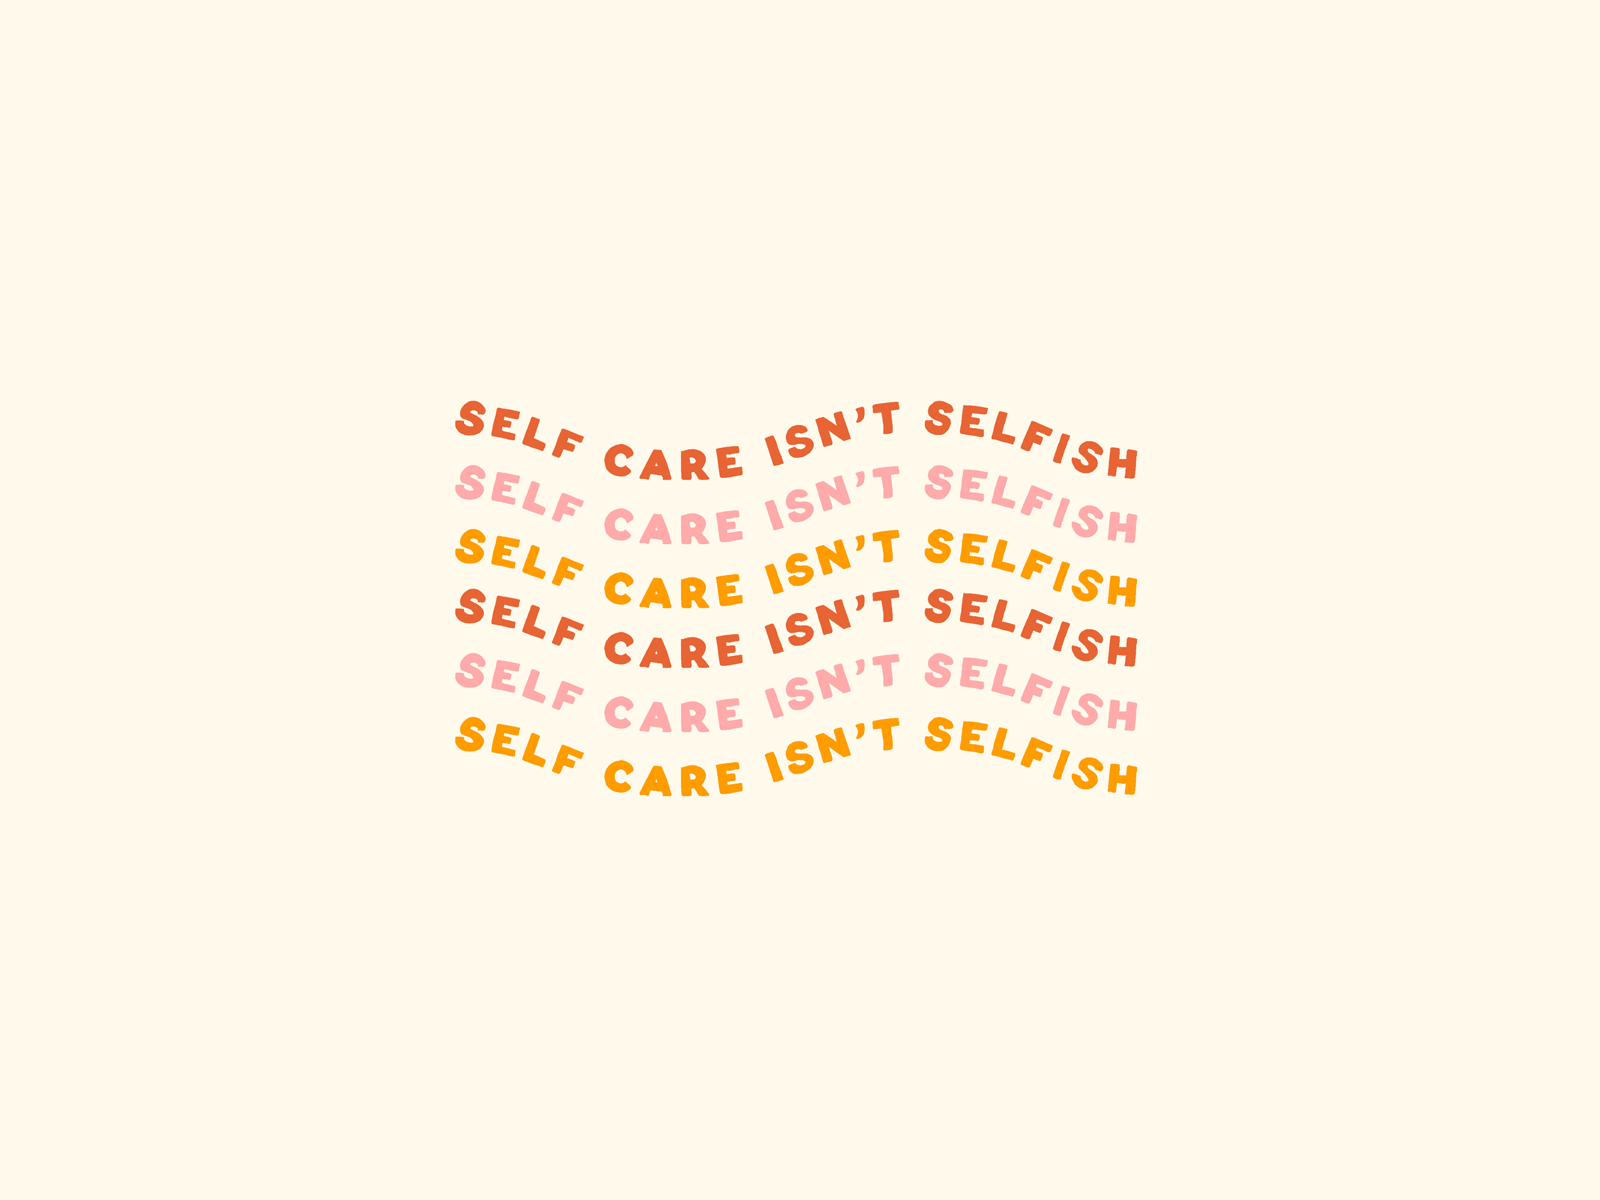 Self Care Isn't Selfish by Tyler Elise Blinderman on Dribbble